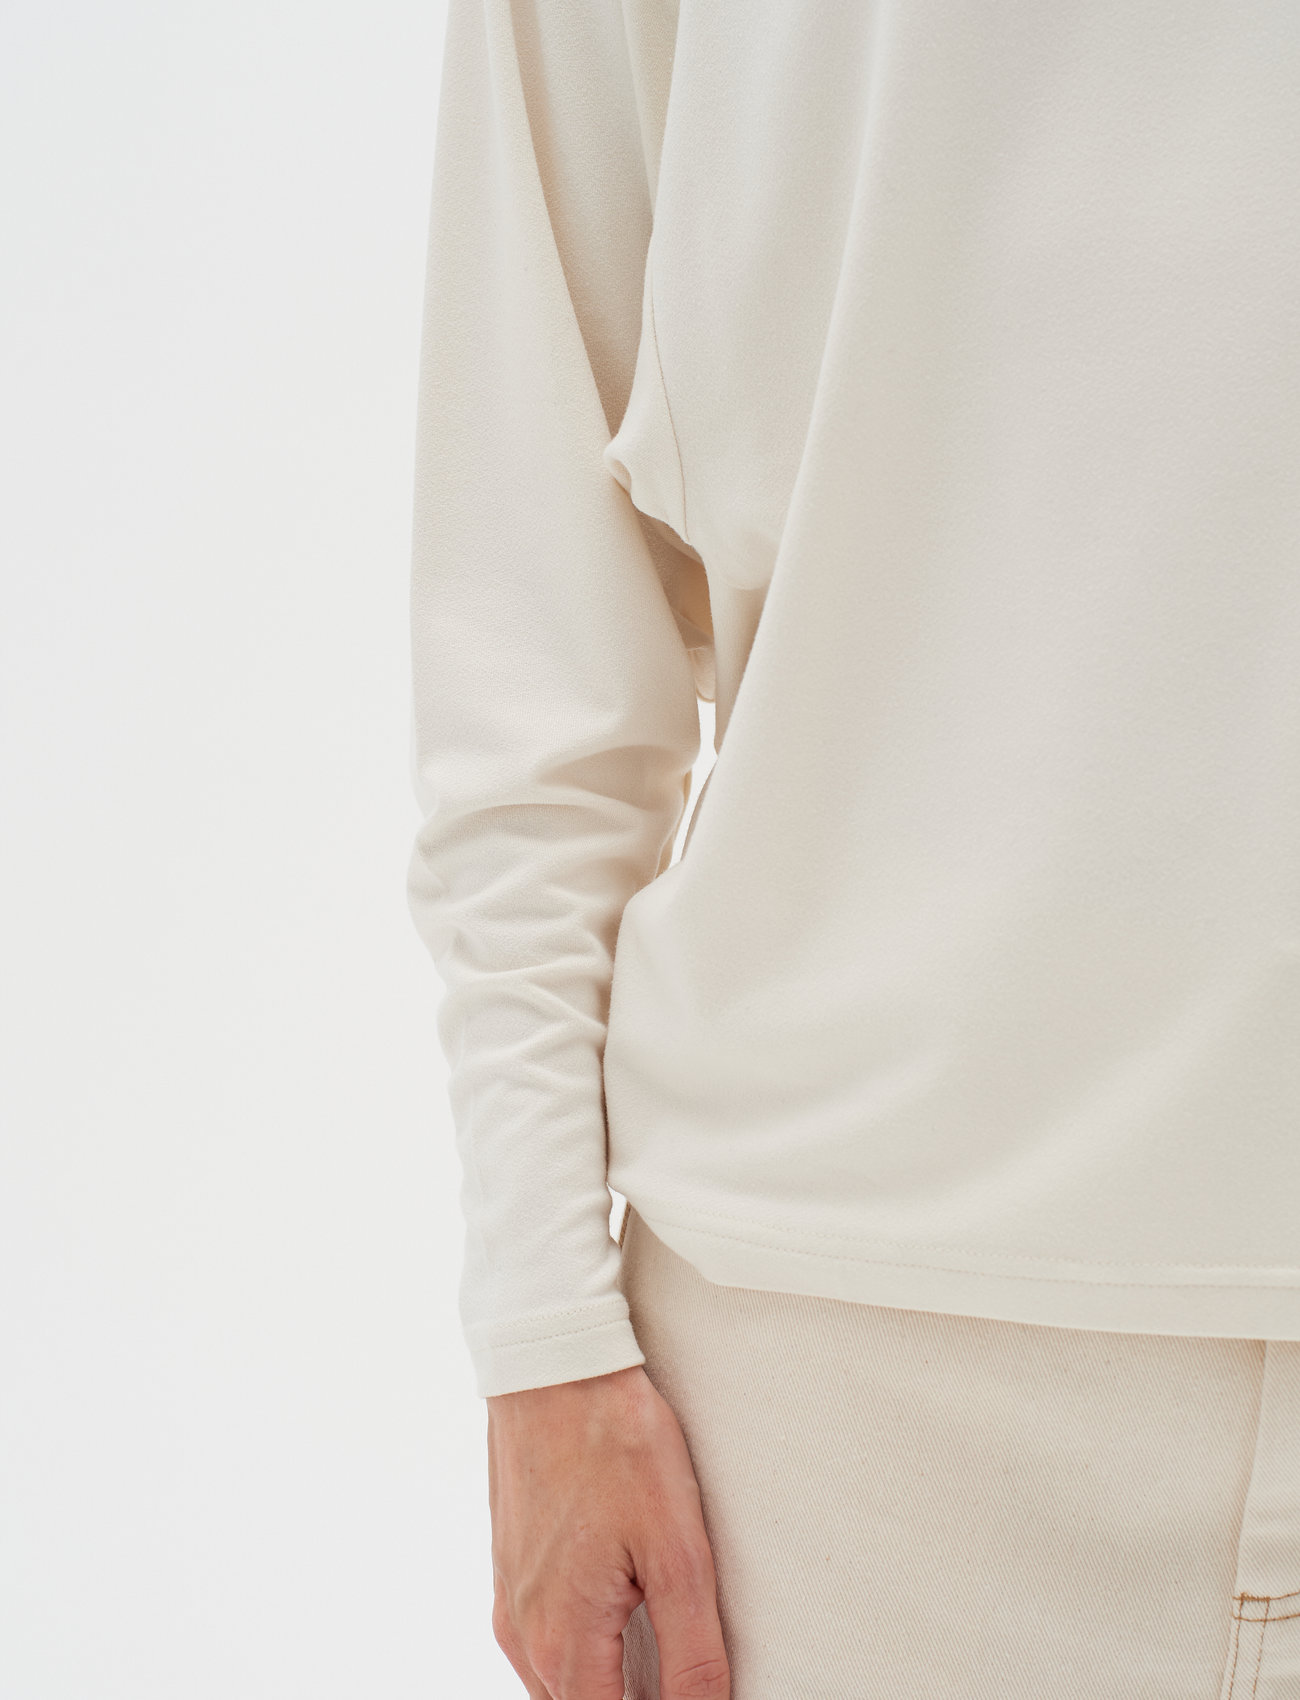 InWear - GrinnyIW Top - long-sleeved blouses - vanilla - 1